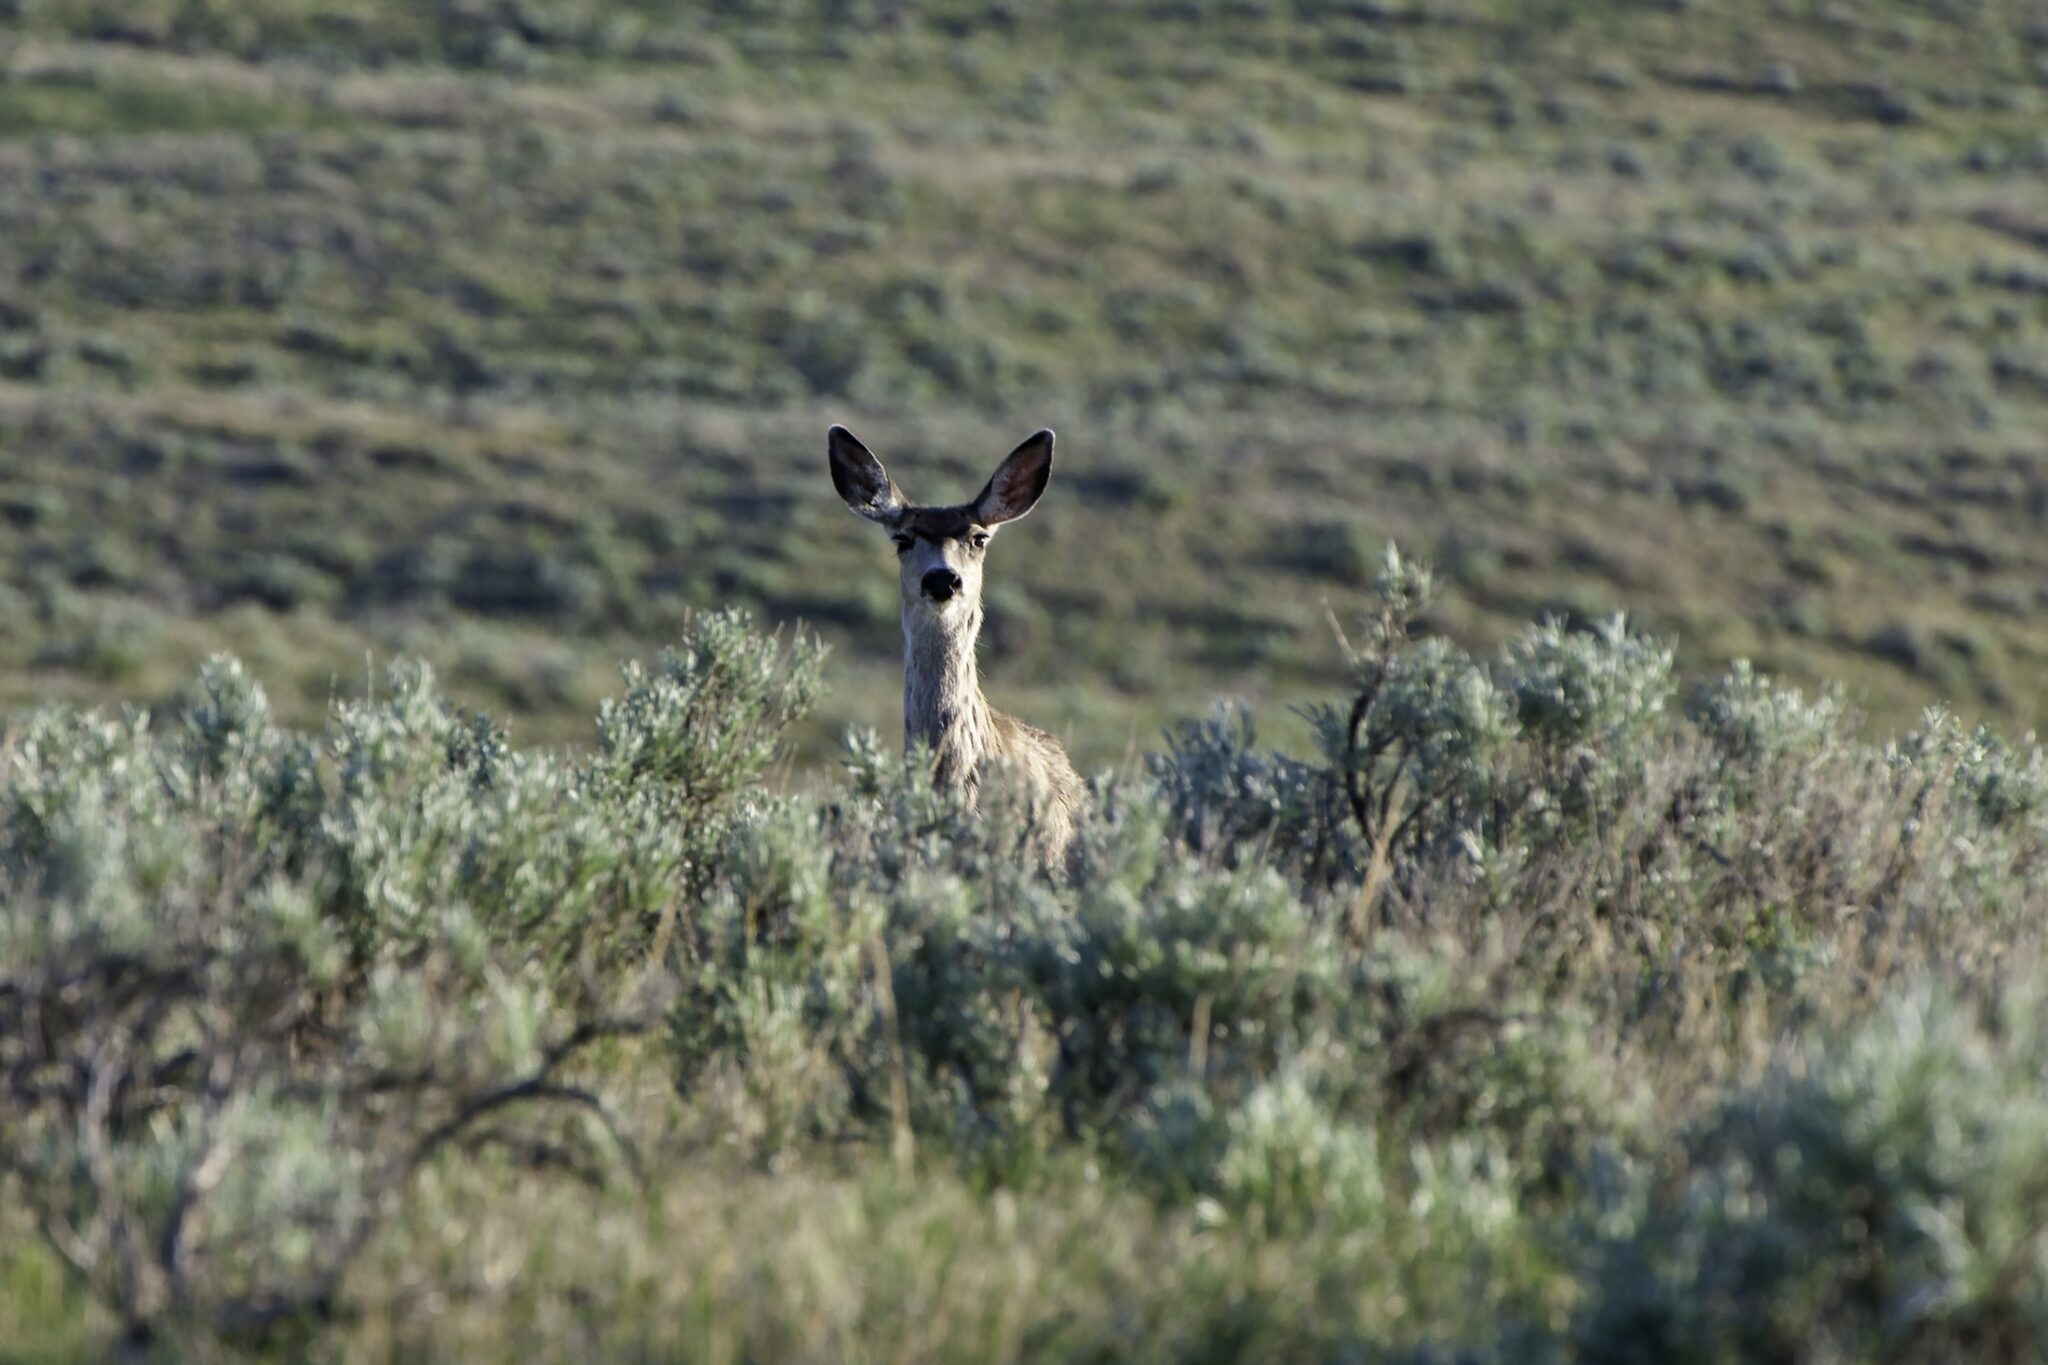 An antlerless deer looks at the camera